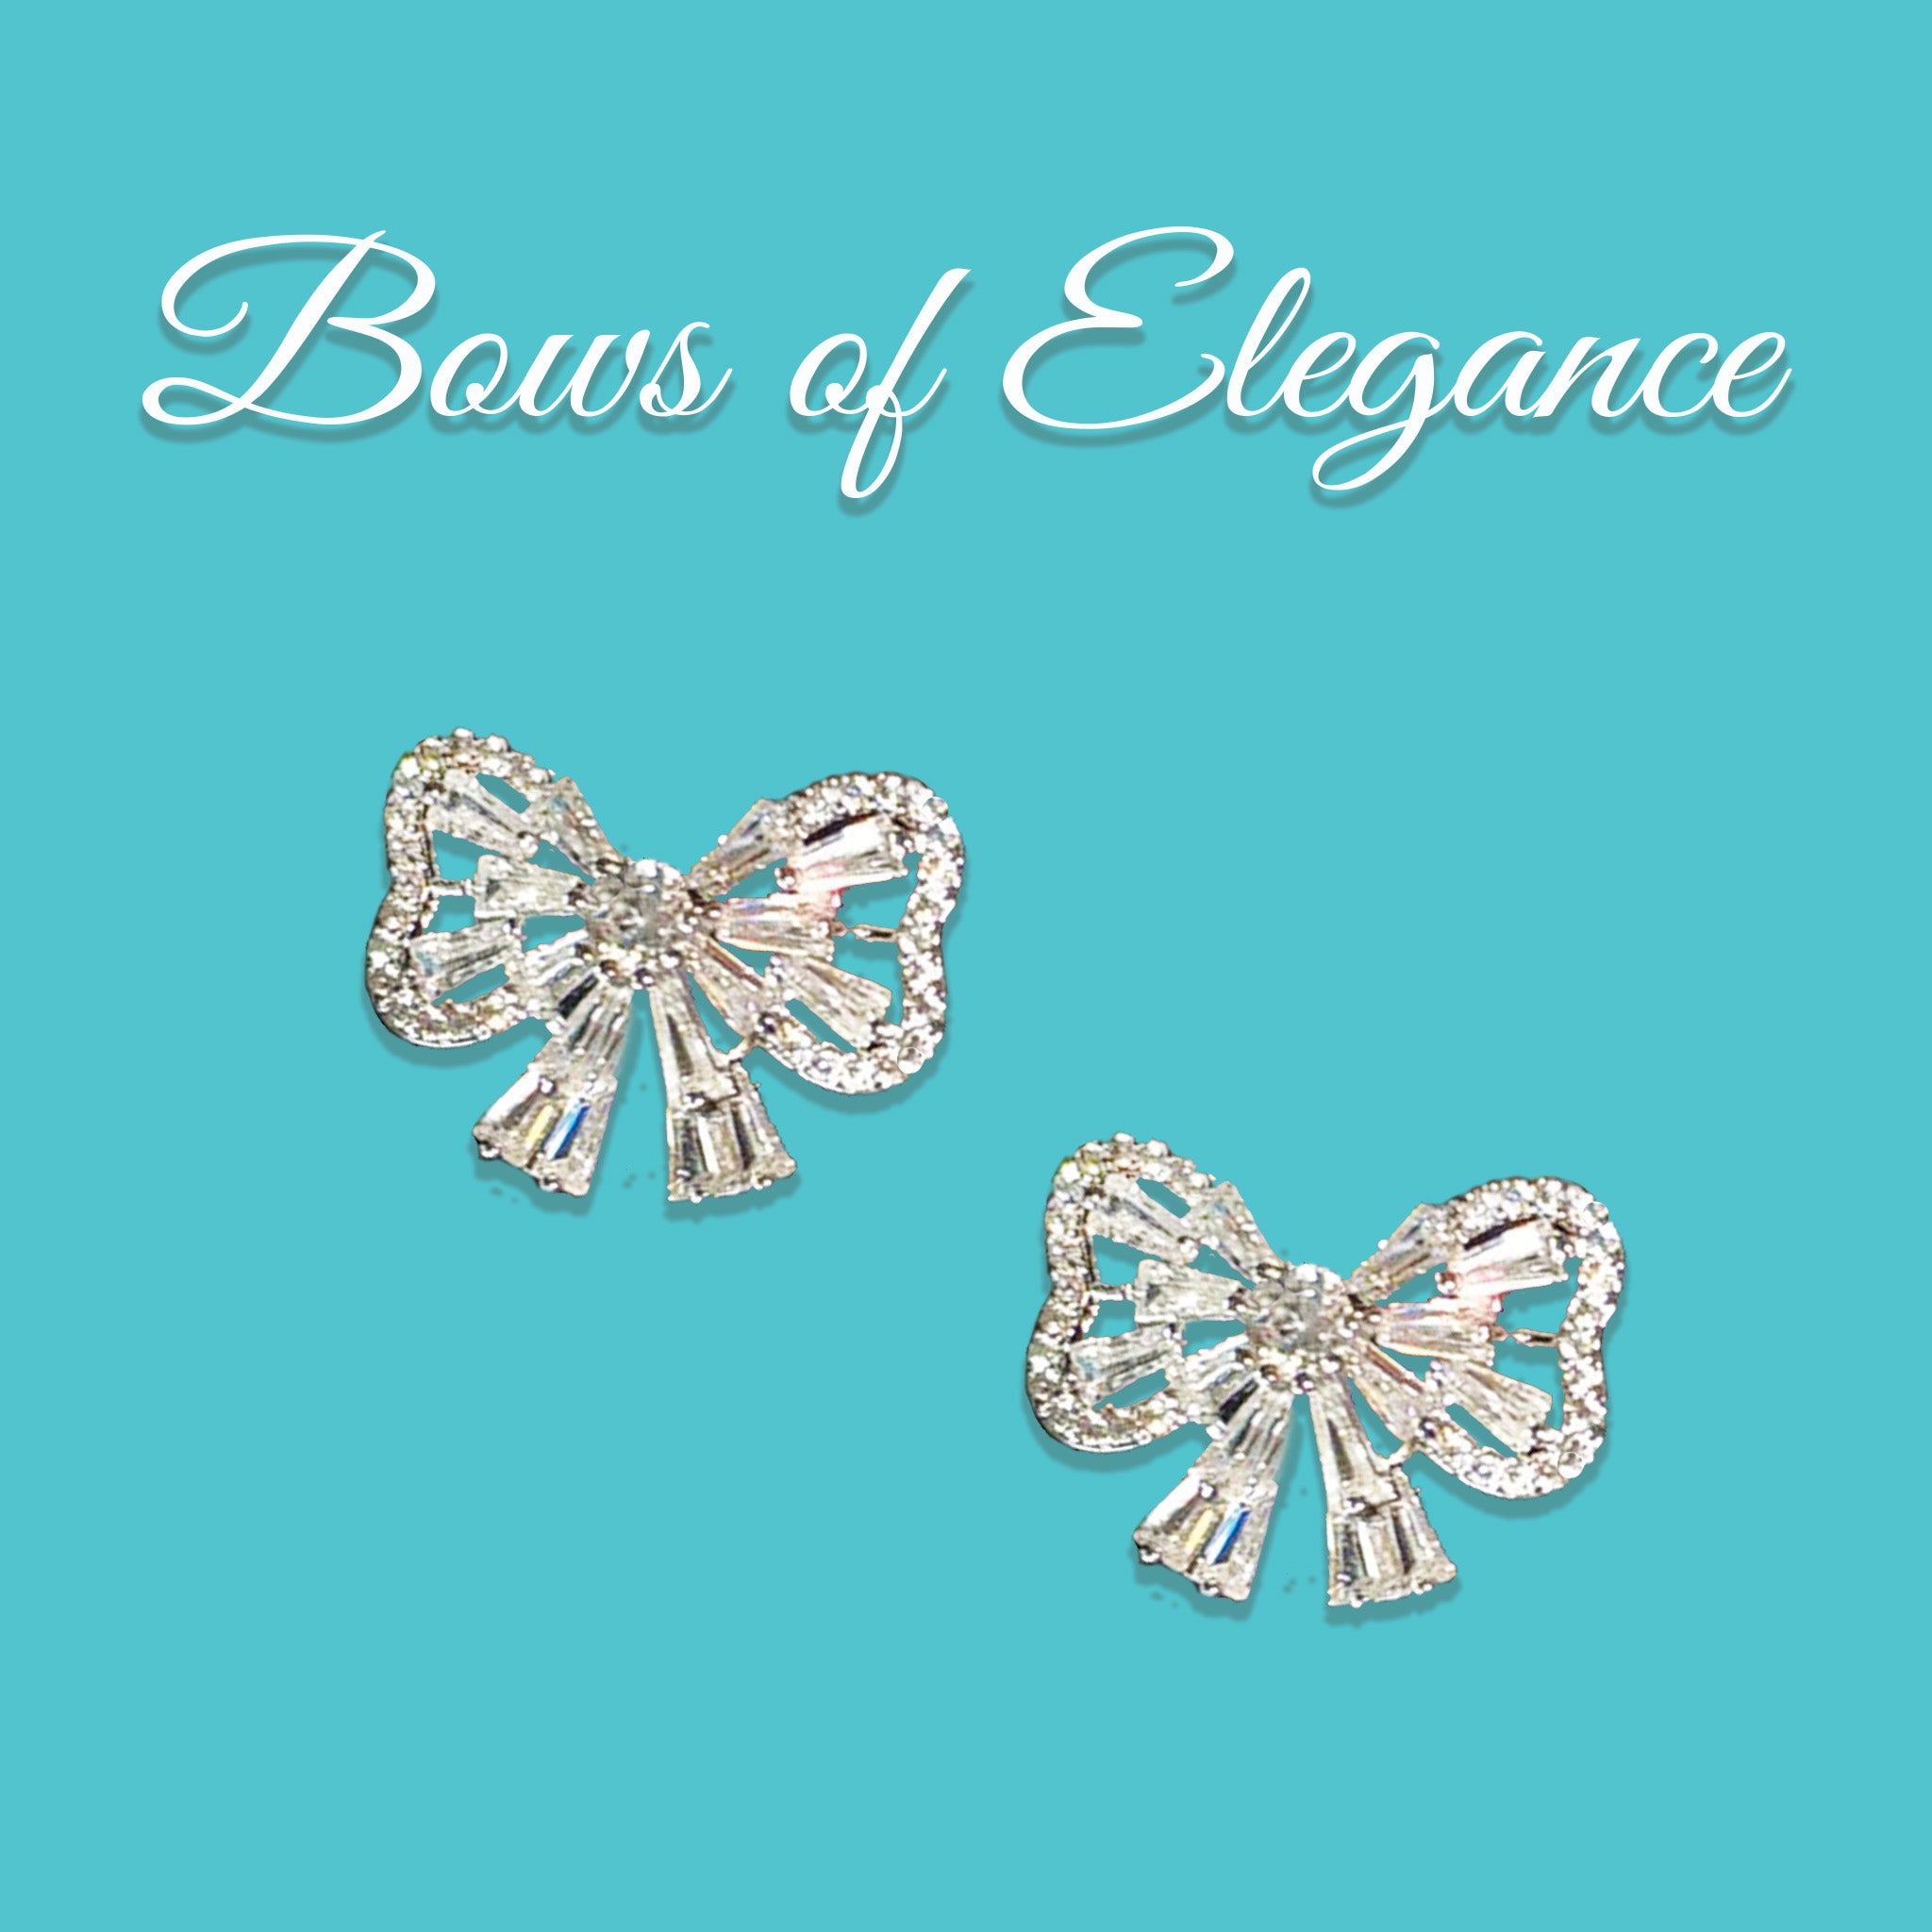 Bows of Elegance